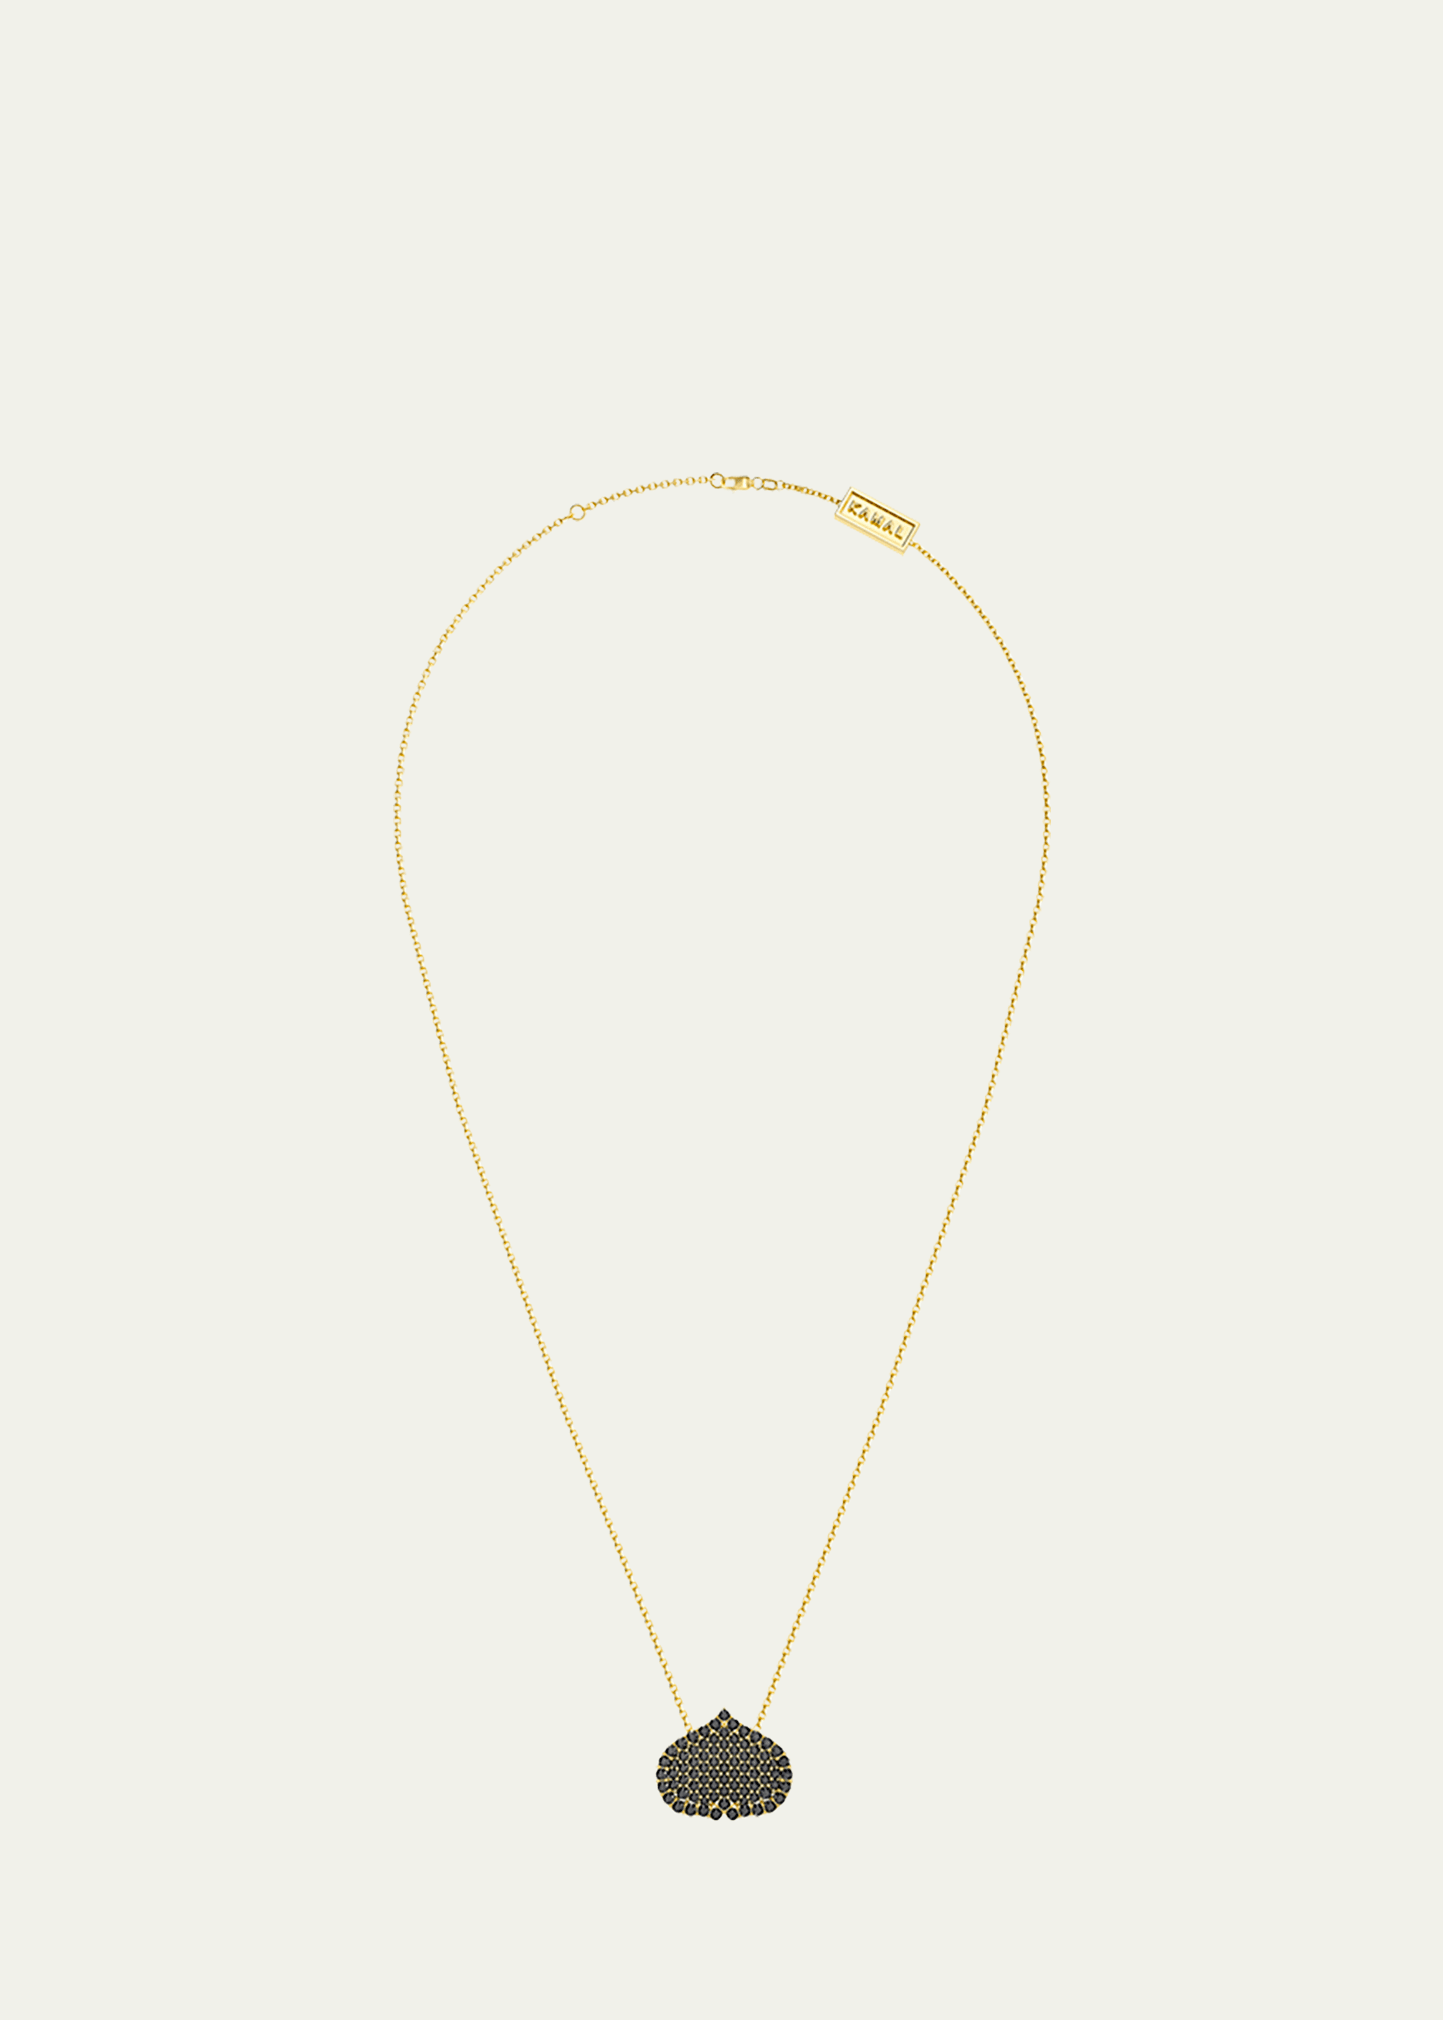 Eye Adore Black Diamond Pave Pendant Necklace, 15mm